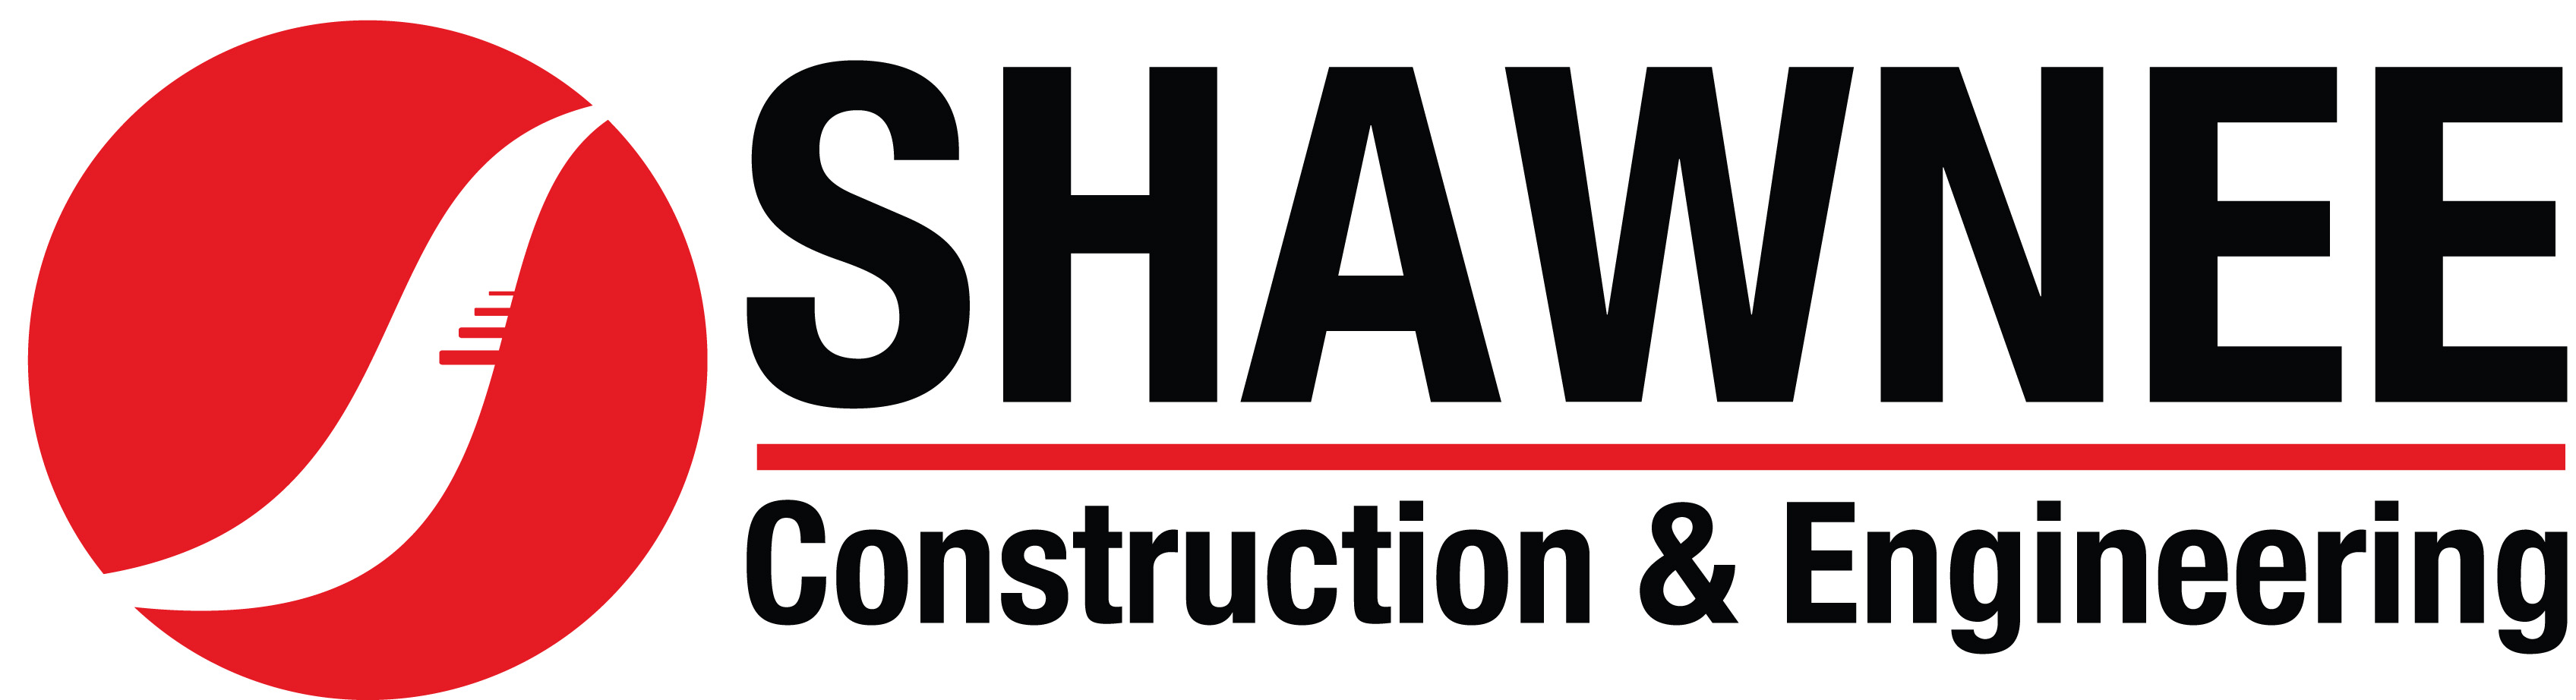 shawnee construction